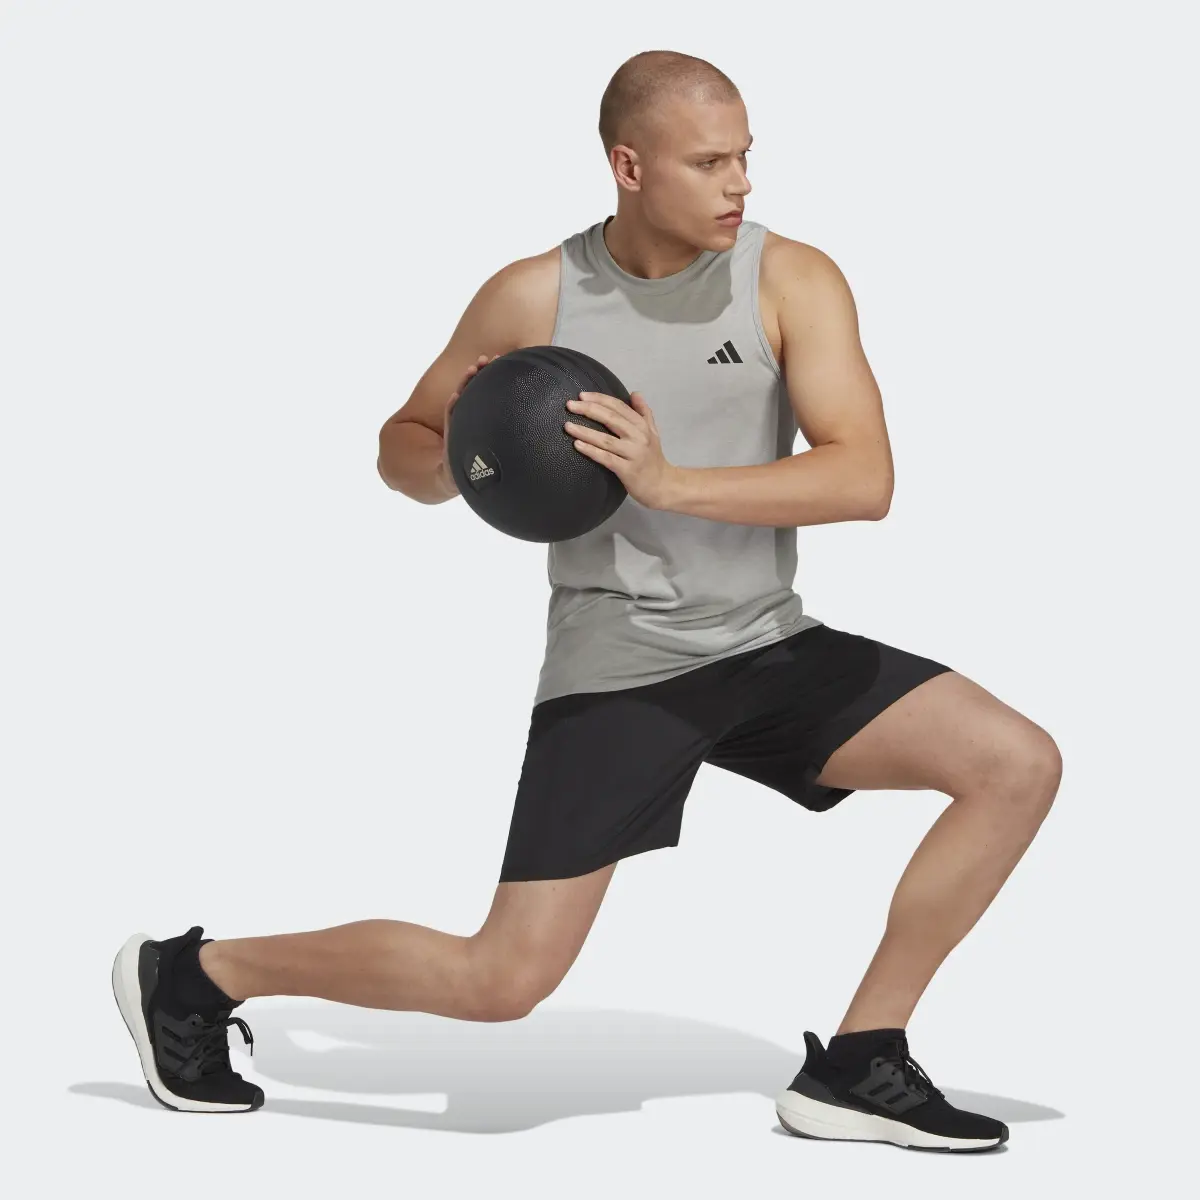 Adidas Train Essentials Woven Training Shorts. 3